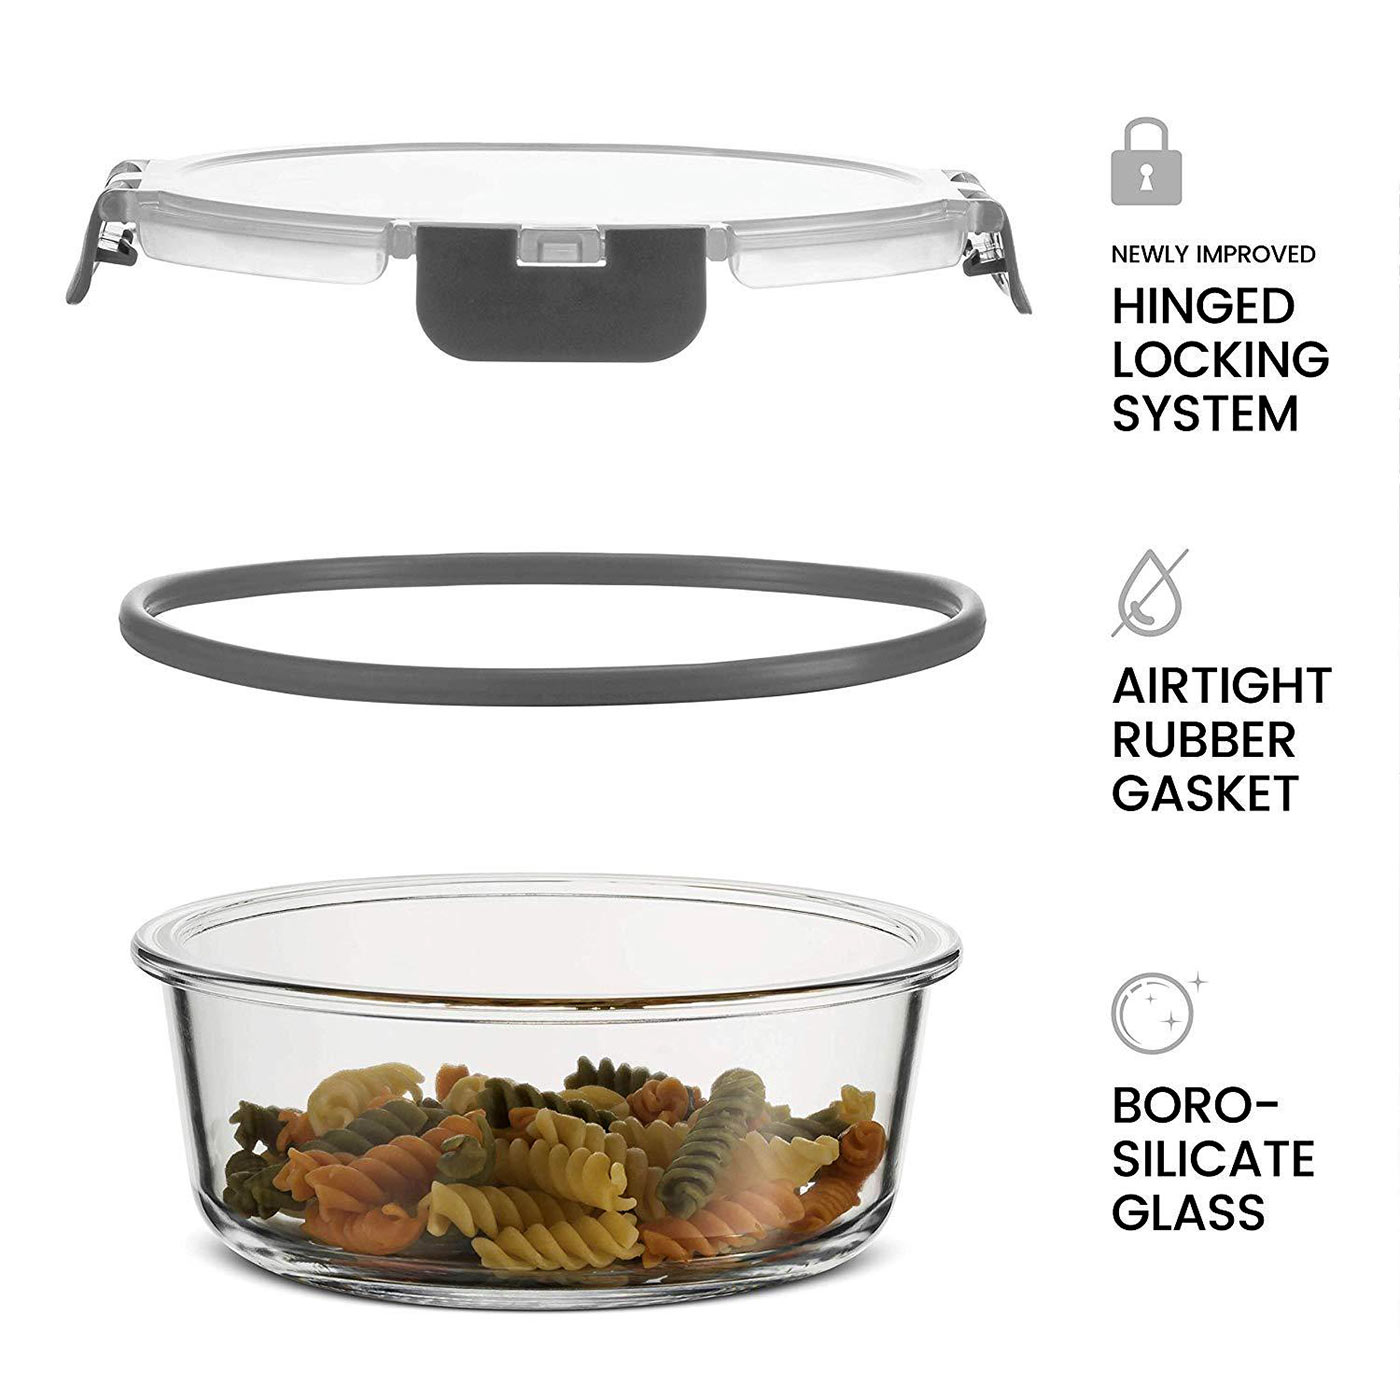 https://www.lodgingkit.com/wp-content/uploads/2021/03/air-tight-kitchen-storage-bowls.jpg